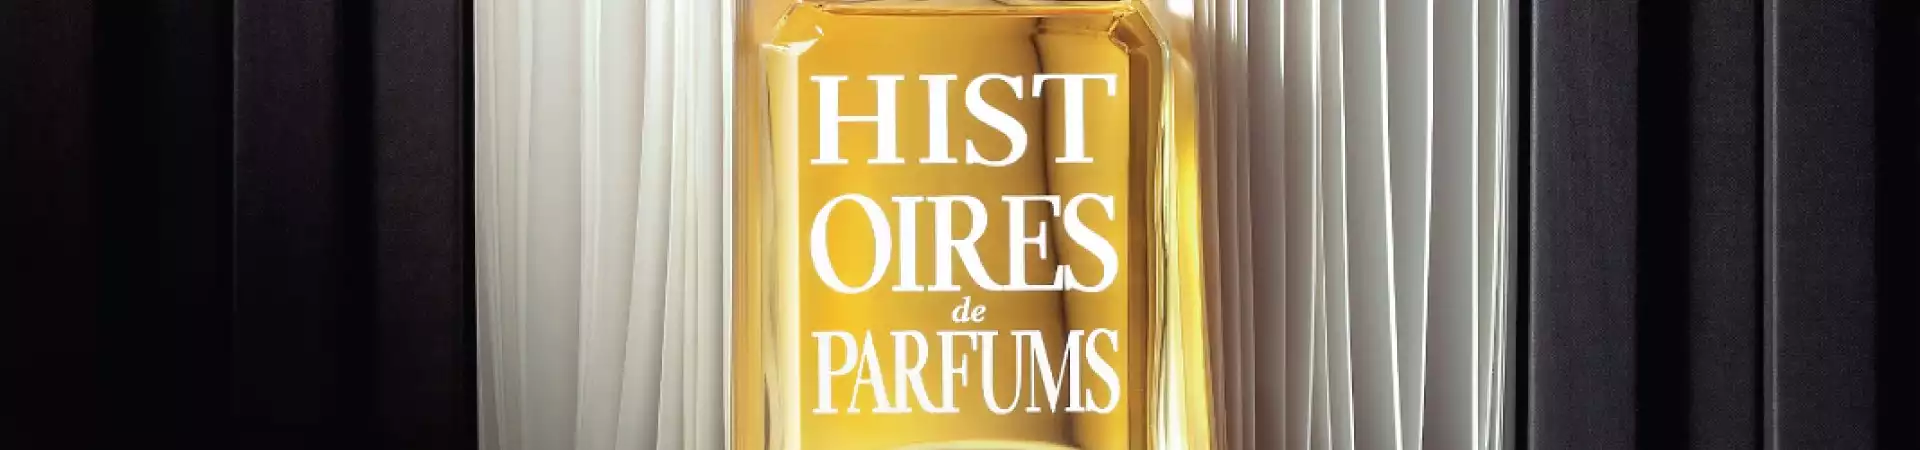  Histoires de Parfums